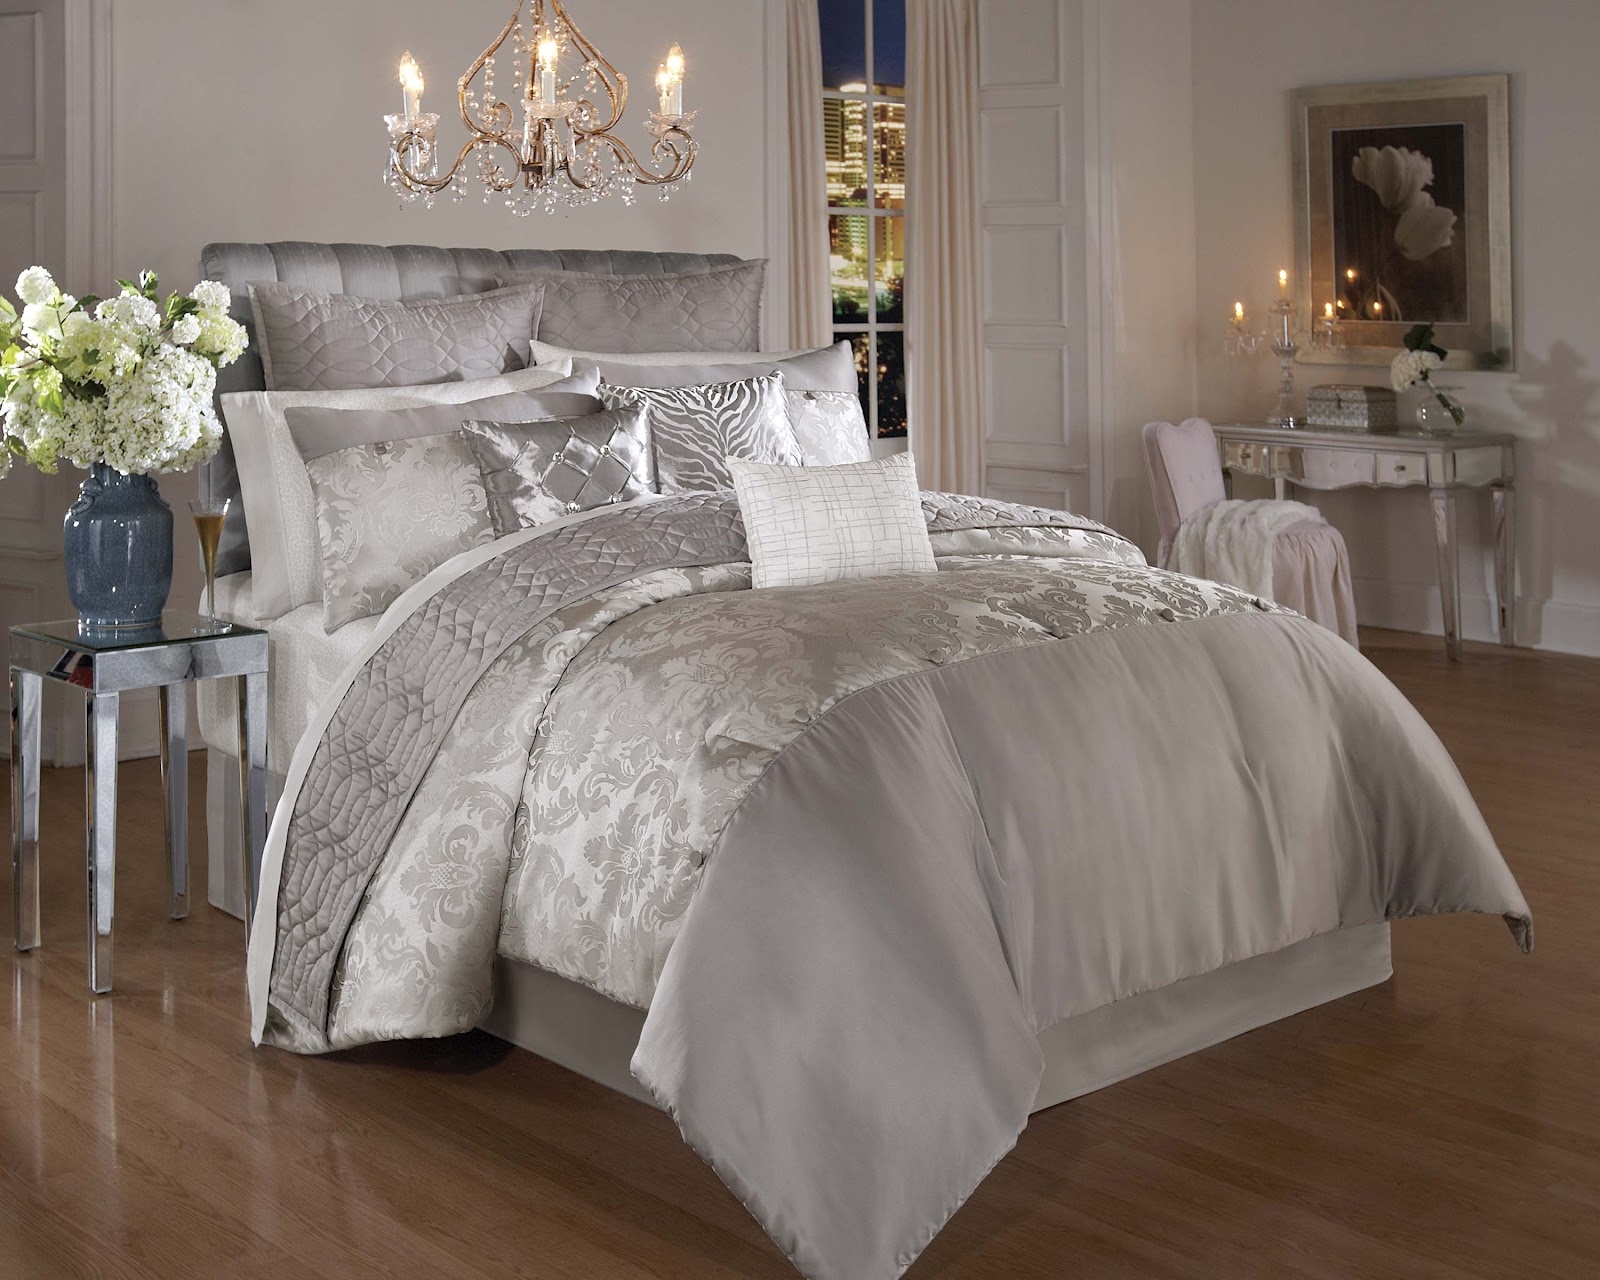 silver cross bedroom furniture